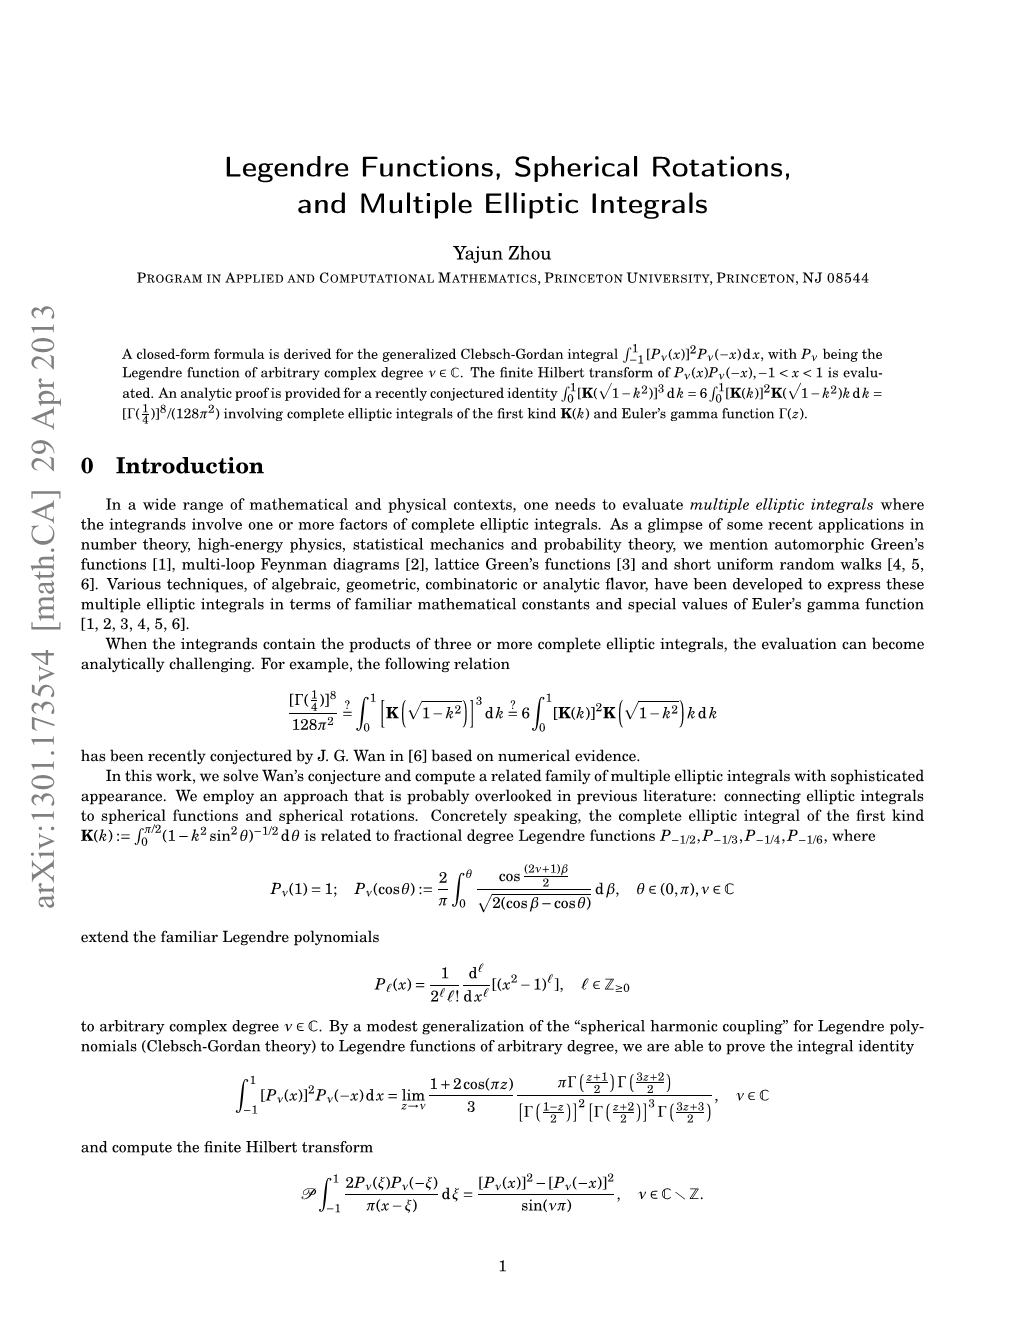 Legendre Functions, Spherical Rotations, and Multiple Elliptic